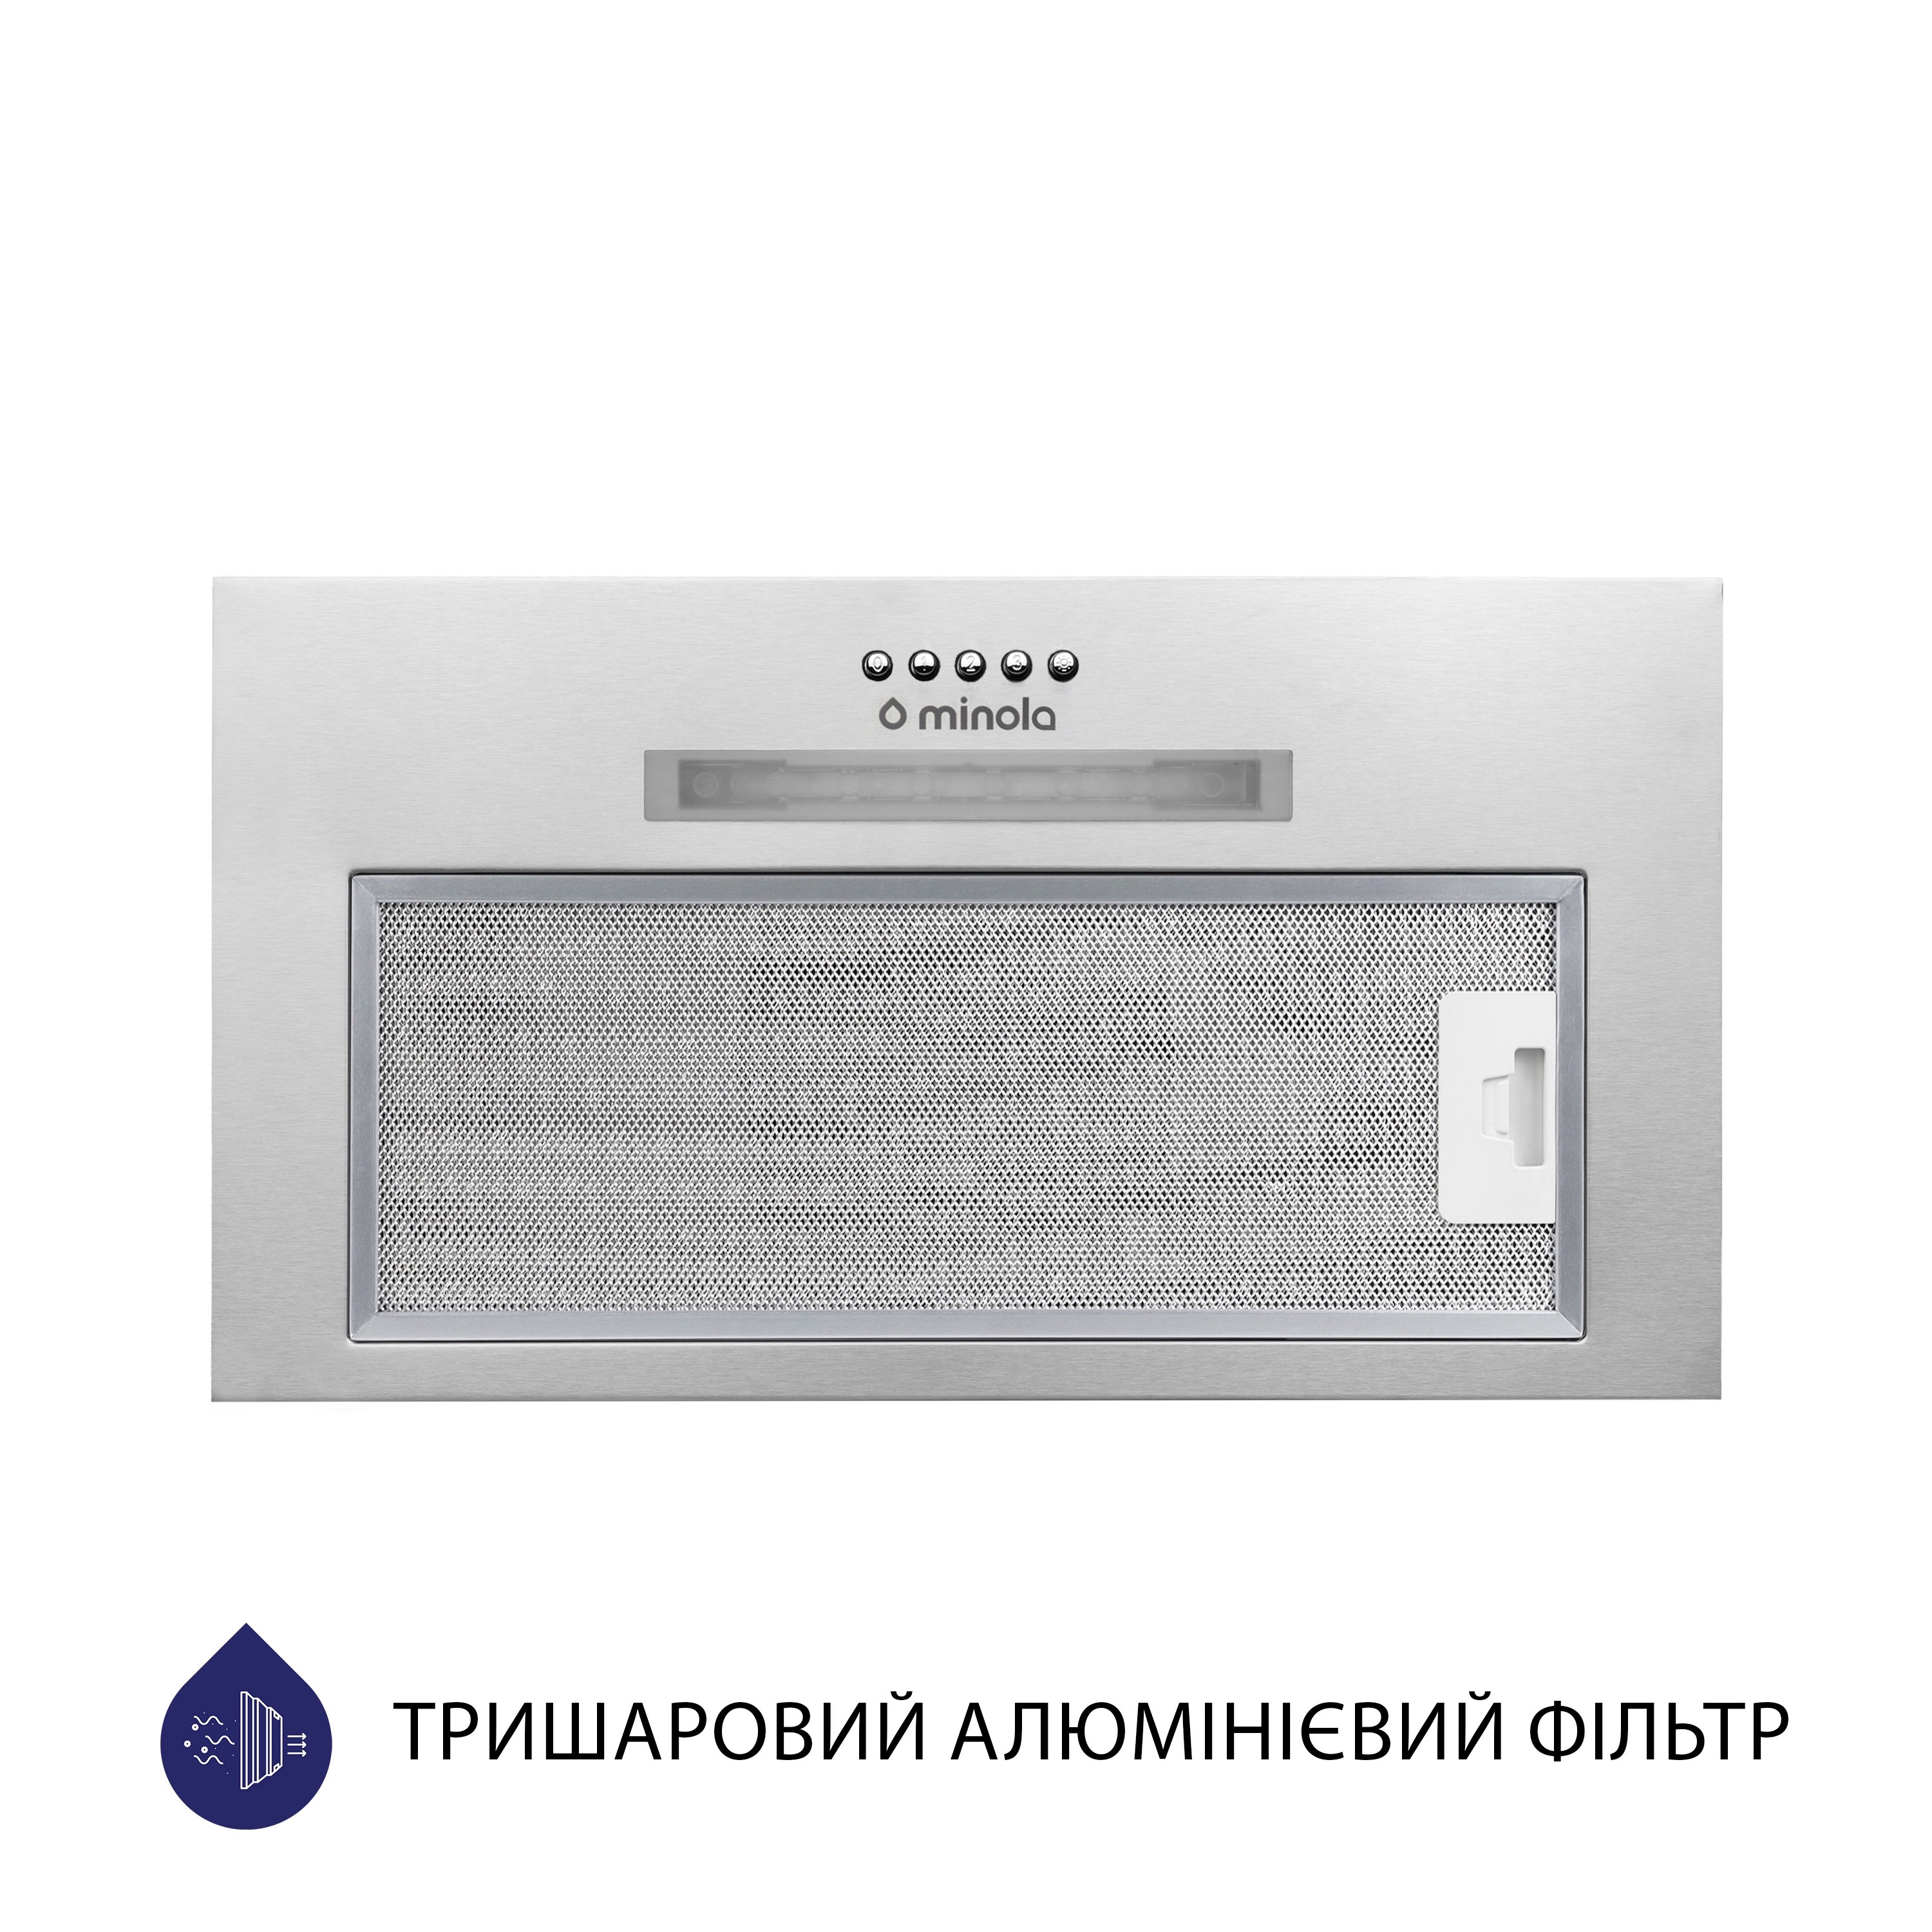 Витяжка кухонная полновстраиваемая Minola HBI 5323 I 800 LED цена 3899.00 грн - фотография 2